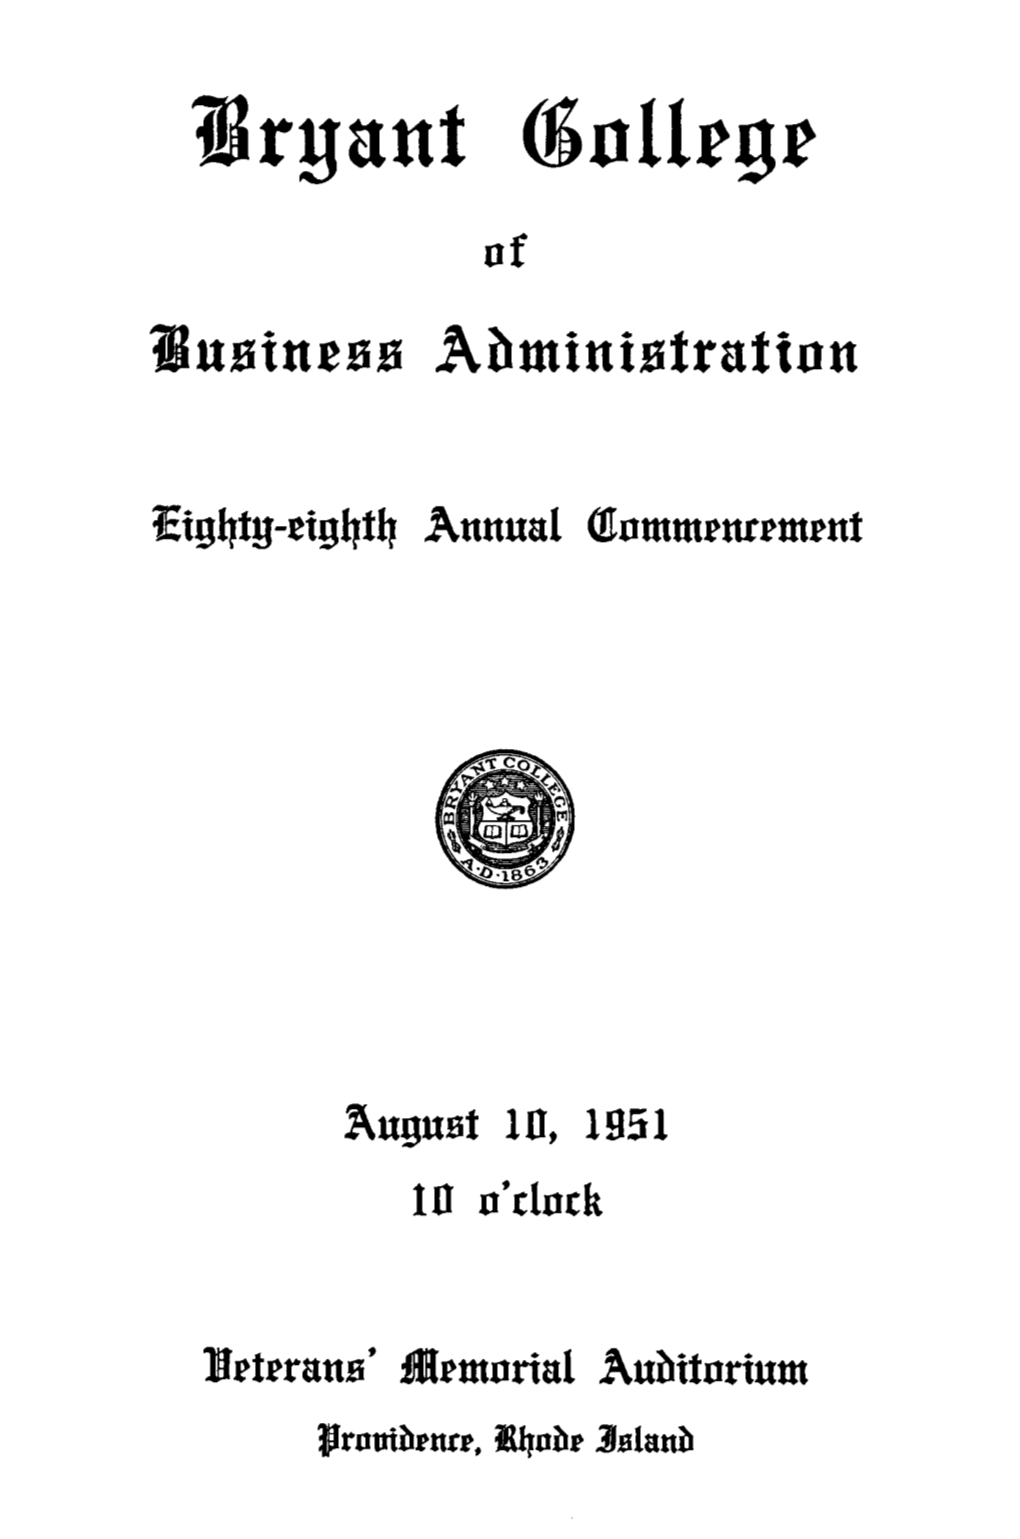 Commencement Exercises Program, August 10, 1951